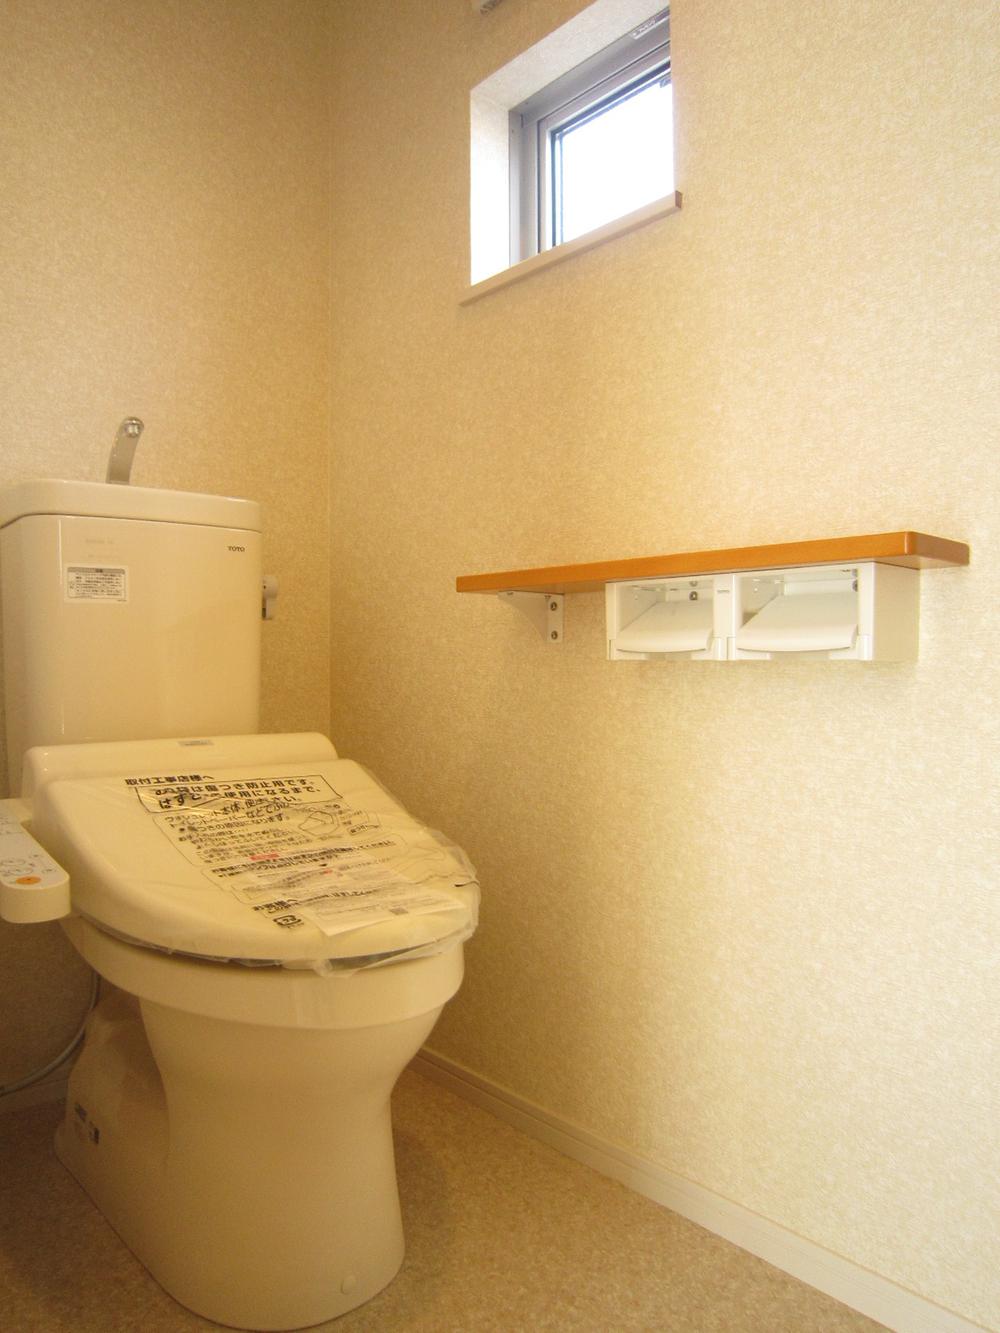 Toilet. Building 2 room (December 2013) Shooting